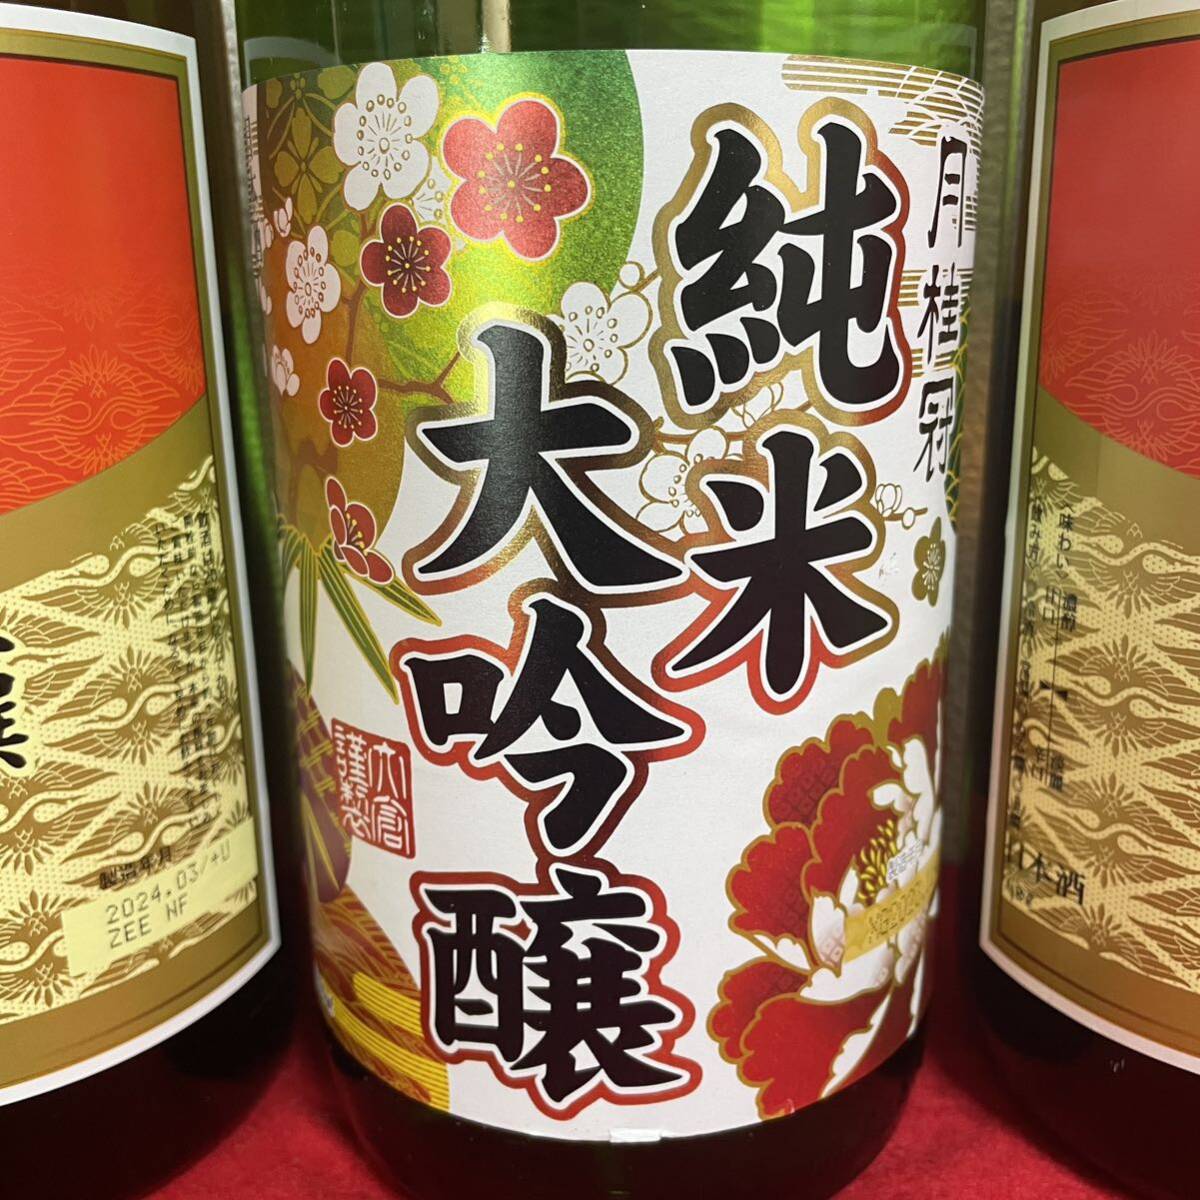 [K1969-] старый sake японкое рисовое вино (sake) месяц багряник японский . дзюнмаи сакэ большой сакэ гиндзё 1 шт. 23 год 11 месяц производство сверху . белый журавль 2 шт 24 год 3 месяц 23 год 12 месяц производство 1800ml 15~16% итого 3шт.